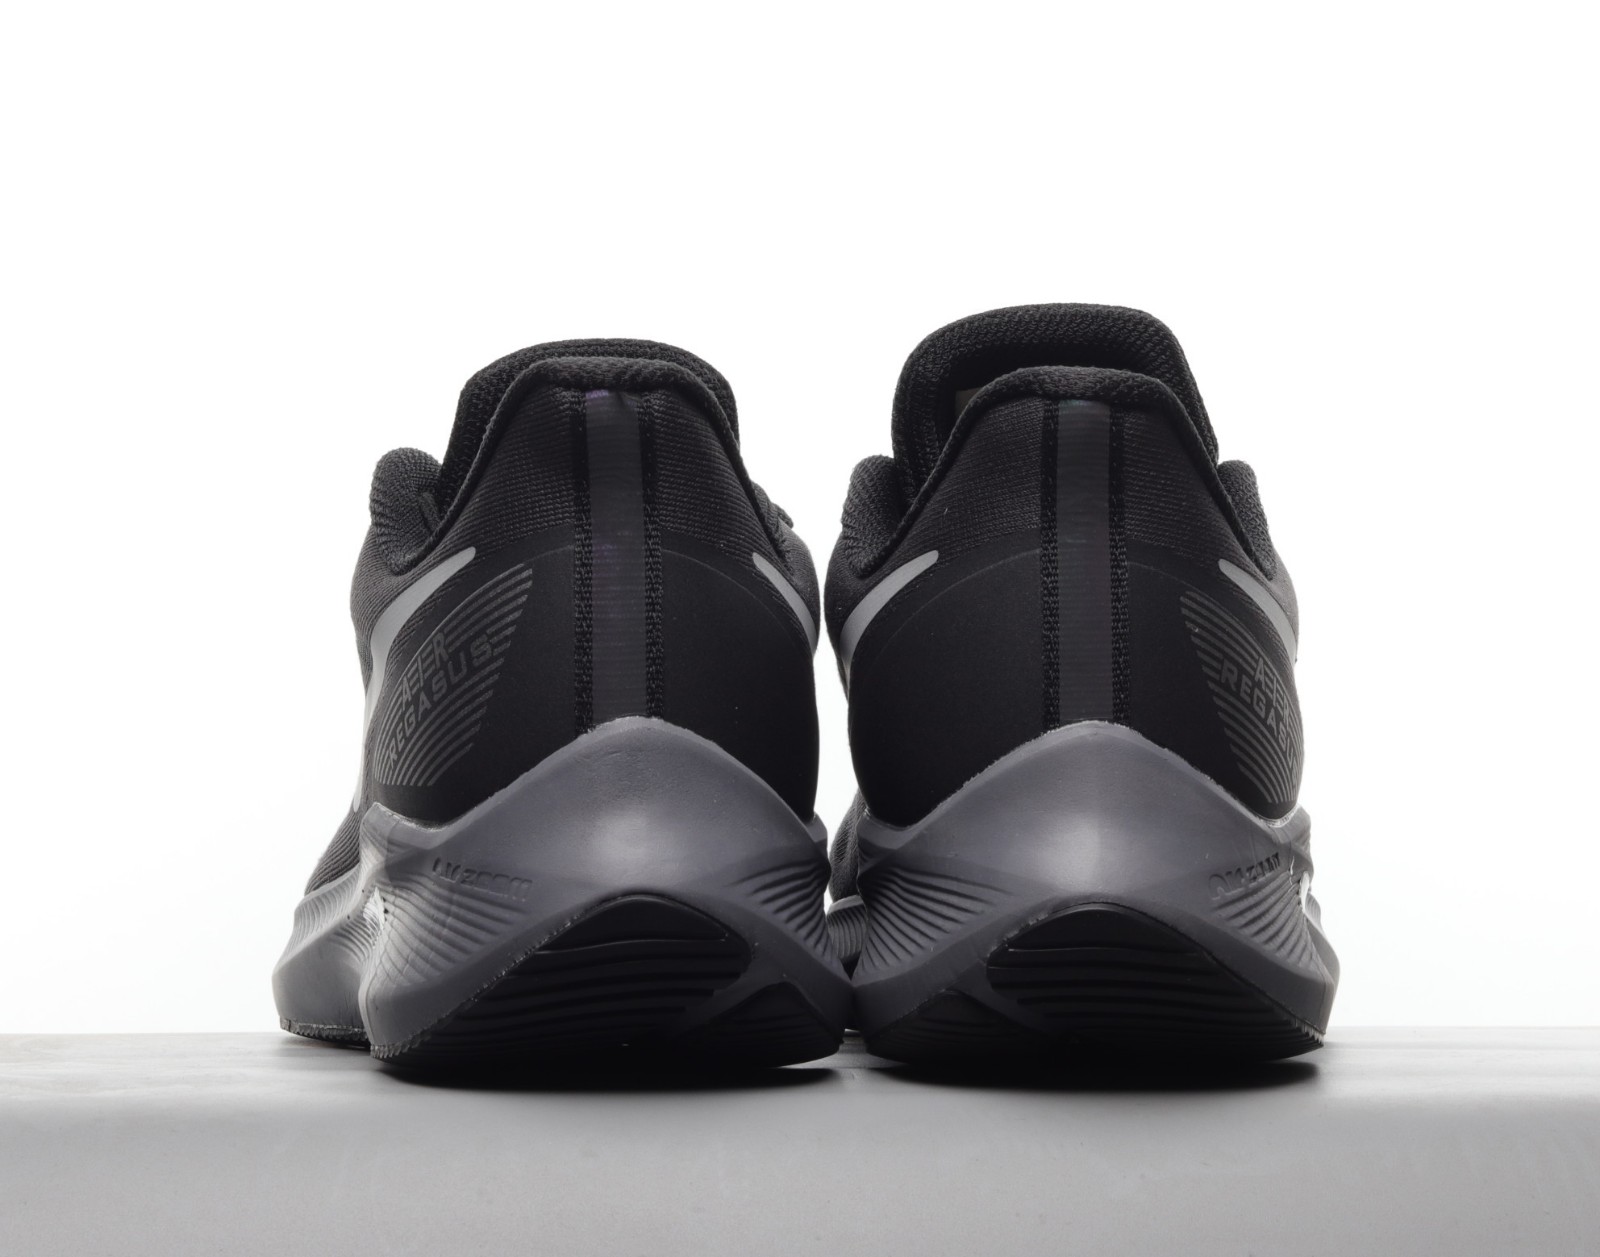 002 - Nike 8 Running Shoes Black Silver Grey - StclaircomoShops - Wmn Lifestyle Shoes Wp 39Q4936